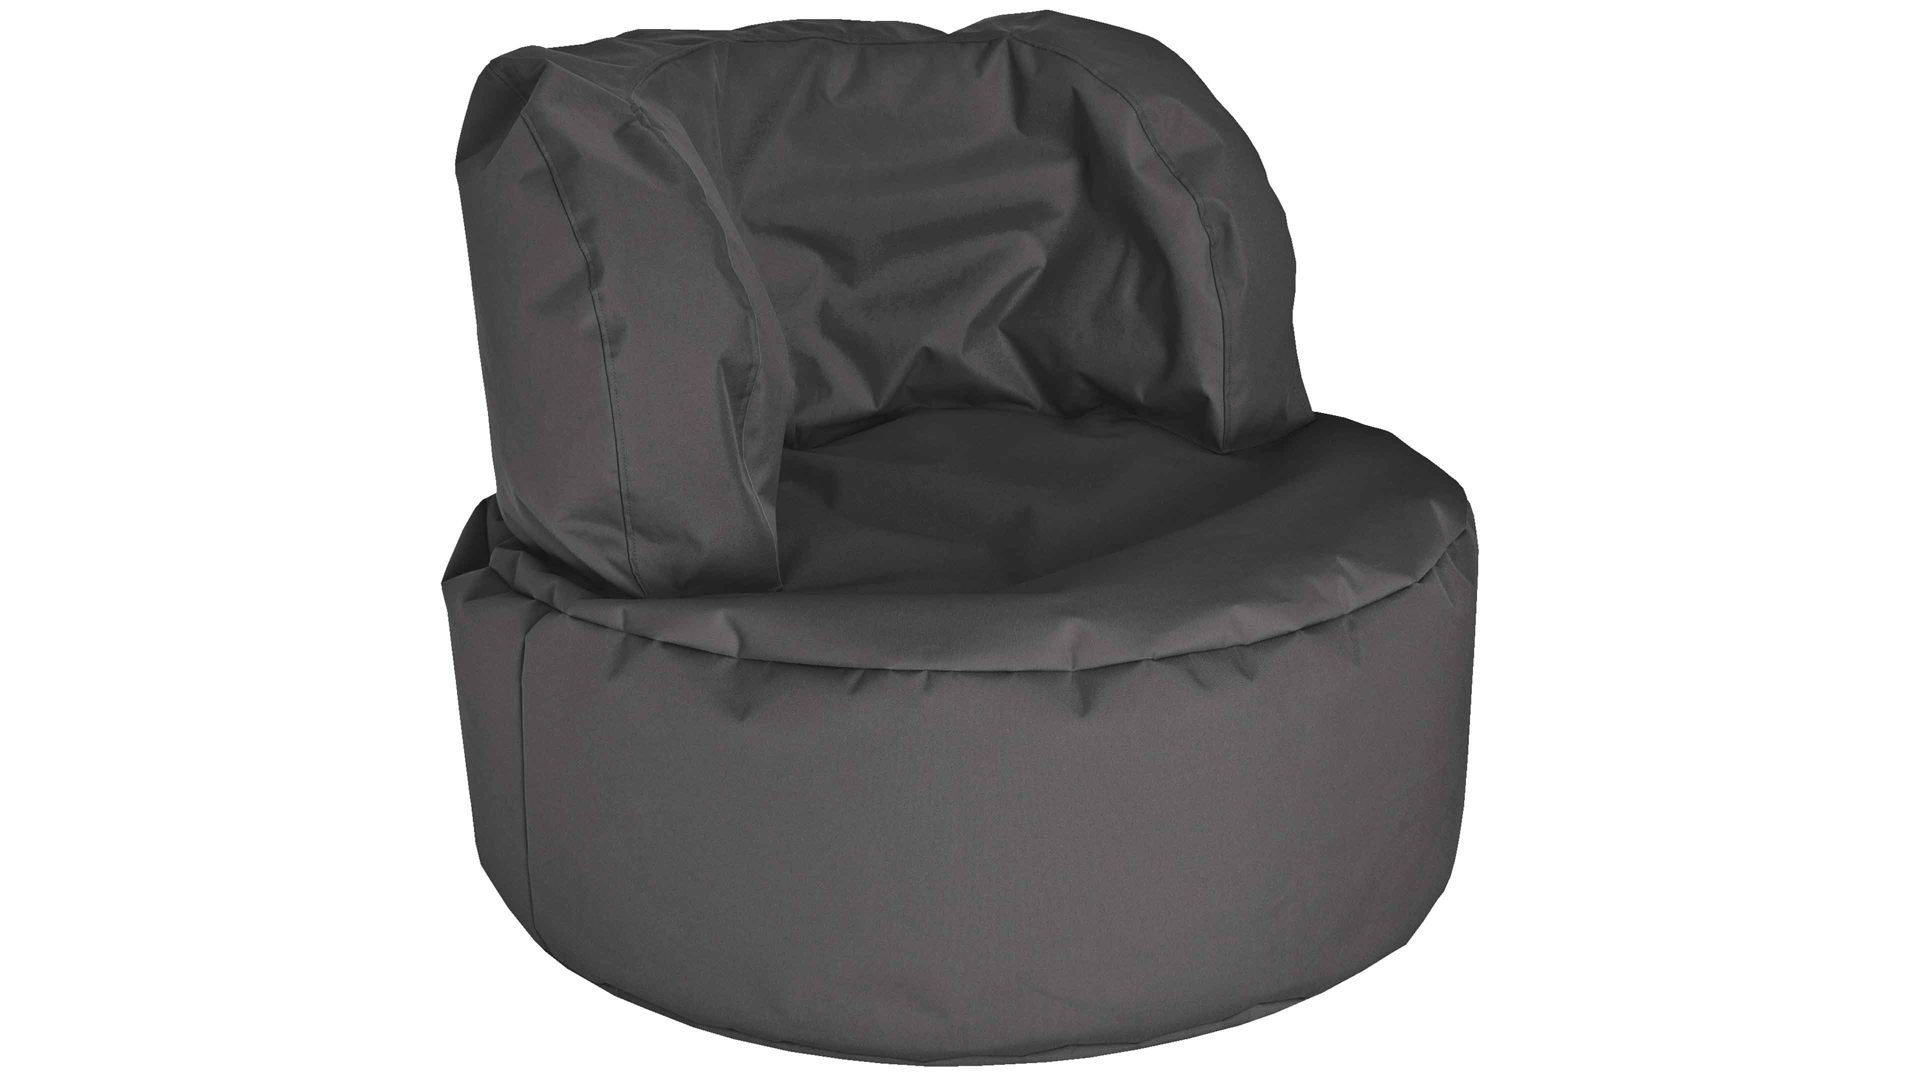 Sitzsack-Sessel Magma sitting point aus Kunstfaser in Anthrazit SITTING POINT Sitzsack-Sessel bebop uni scuba® als Sitzmöbel anthrazitfarbene Kunstfaser - ca. 85 x 65 cm